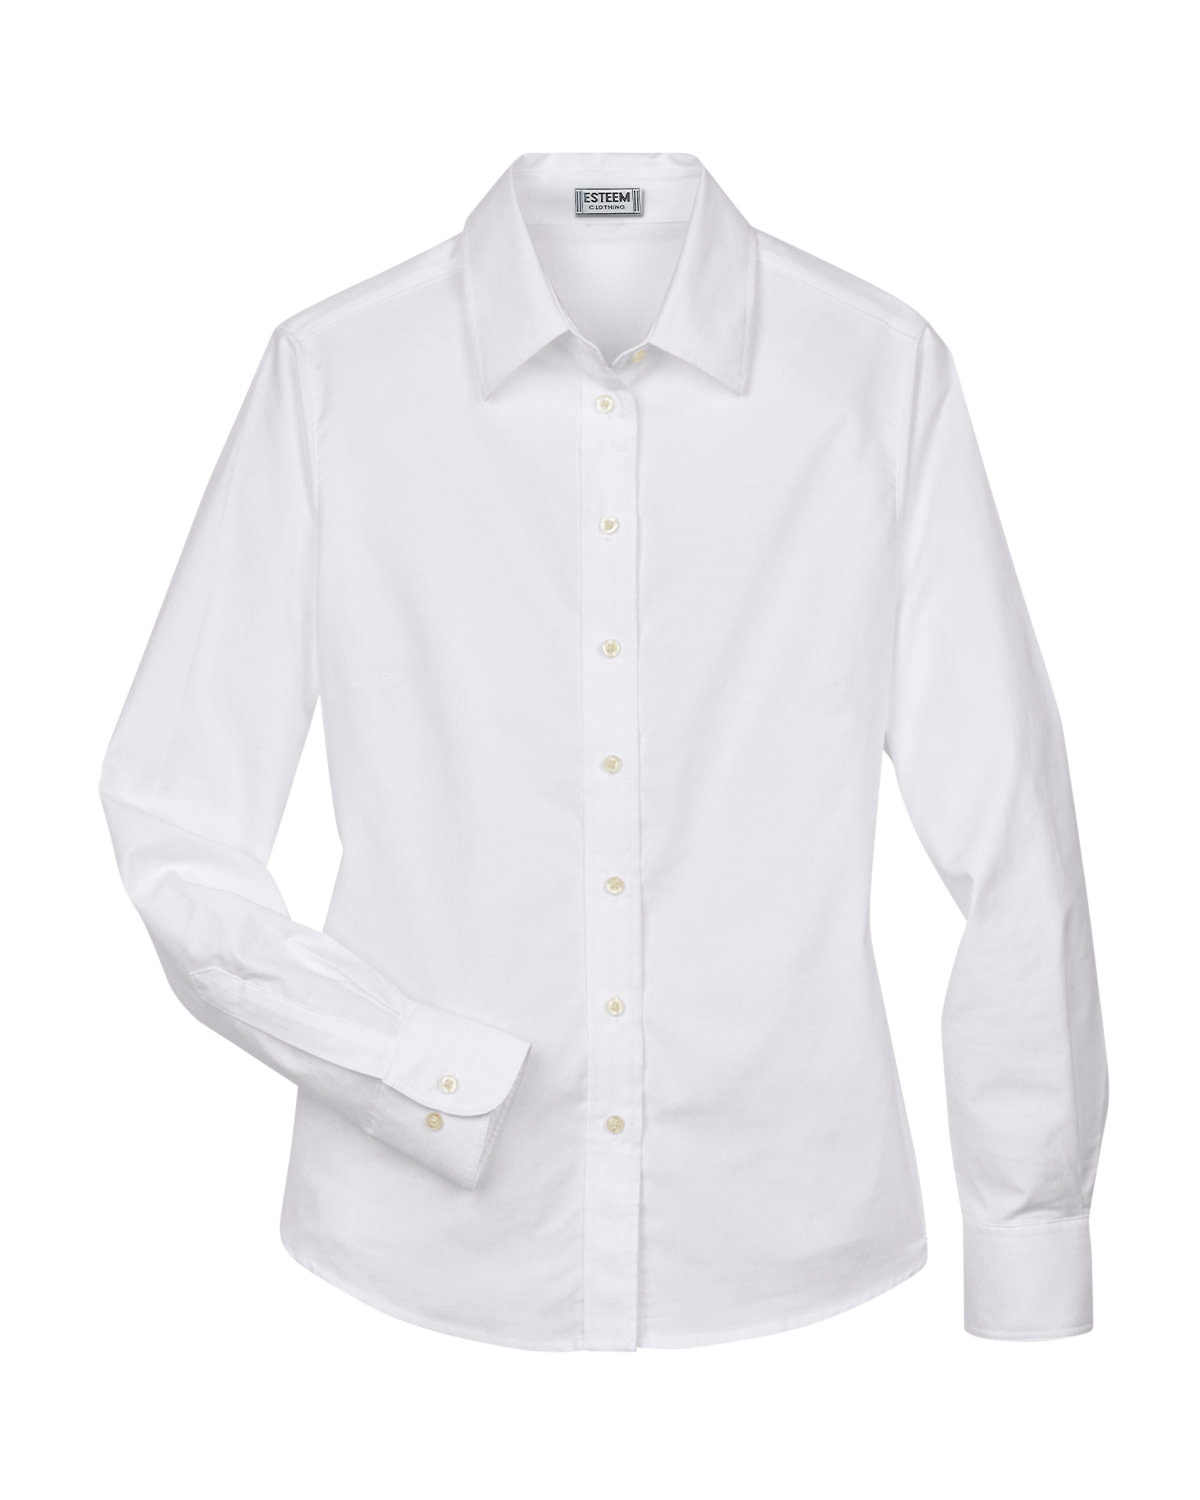 CVC 60/40 Ladies Long sleeve oxford shirt with logo - RES